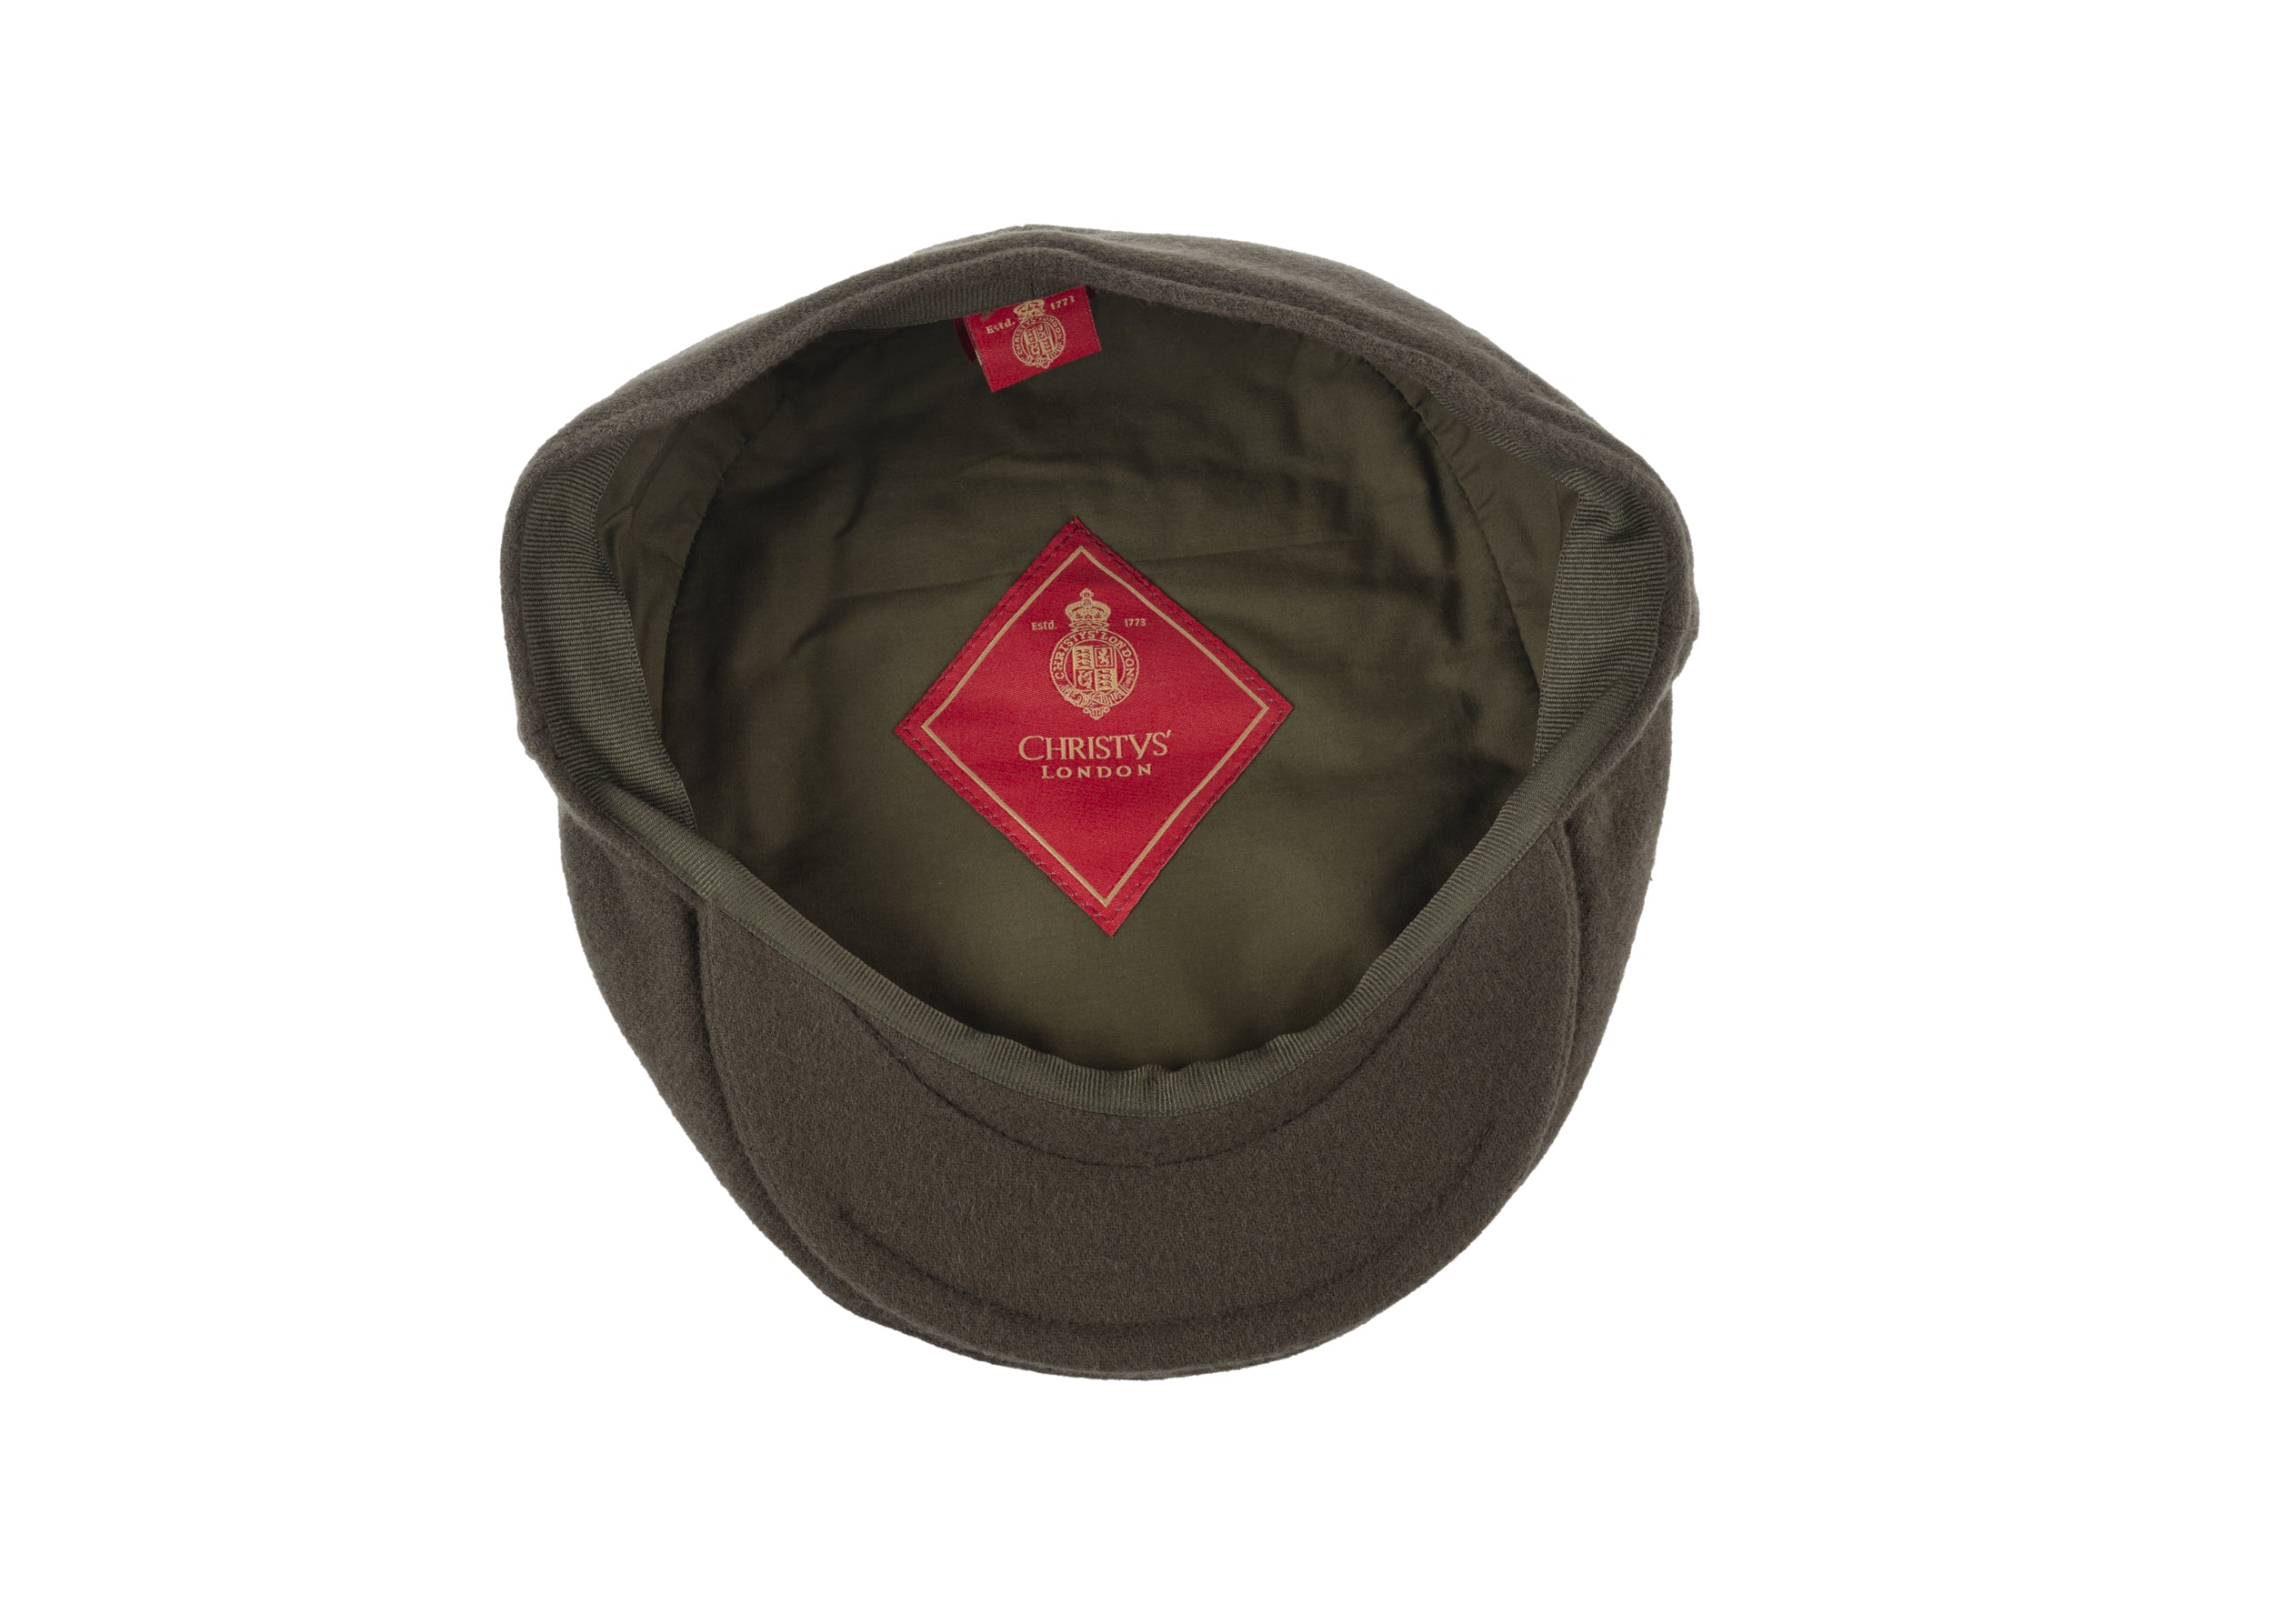 Josh balmoral flat cap in cashmere/wool blend fabric in Khaki